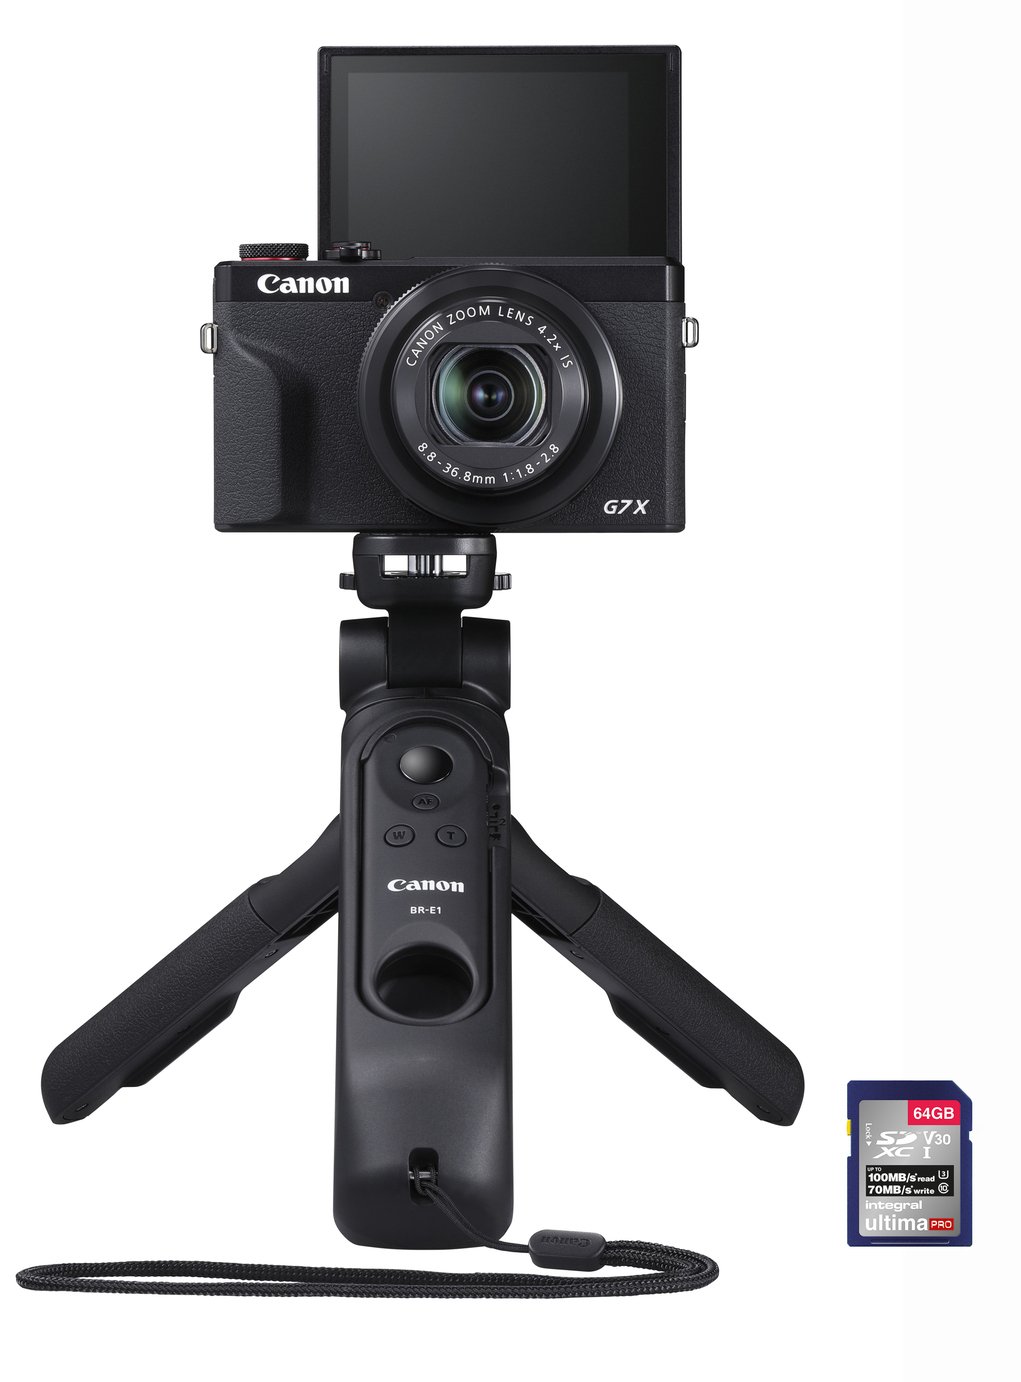 Canon PowerShot G7X Mark III Vlogger Camera Kit Review